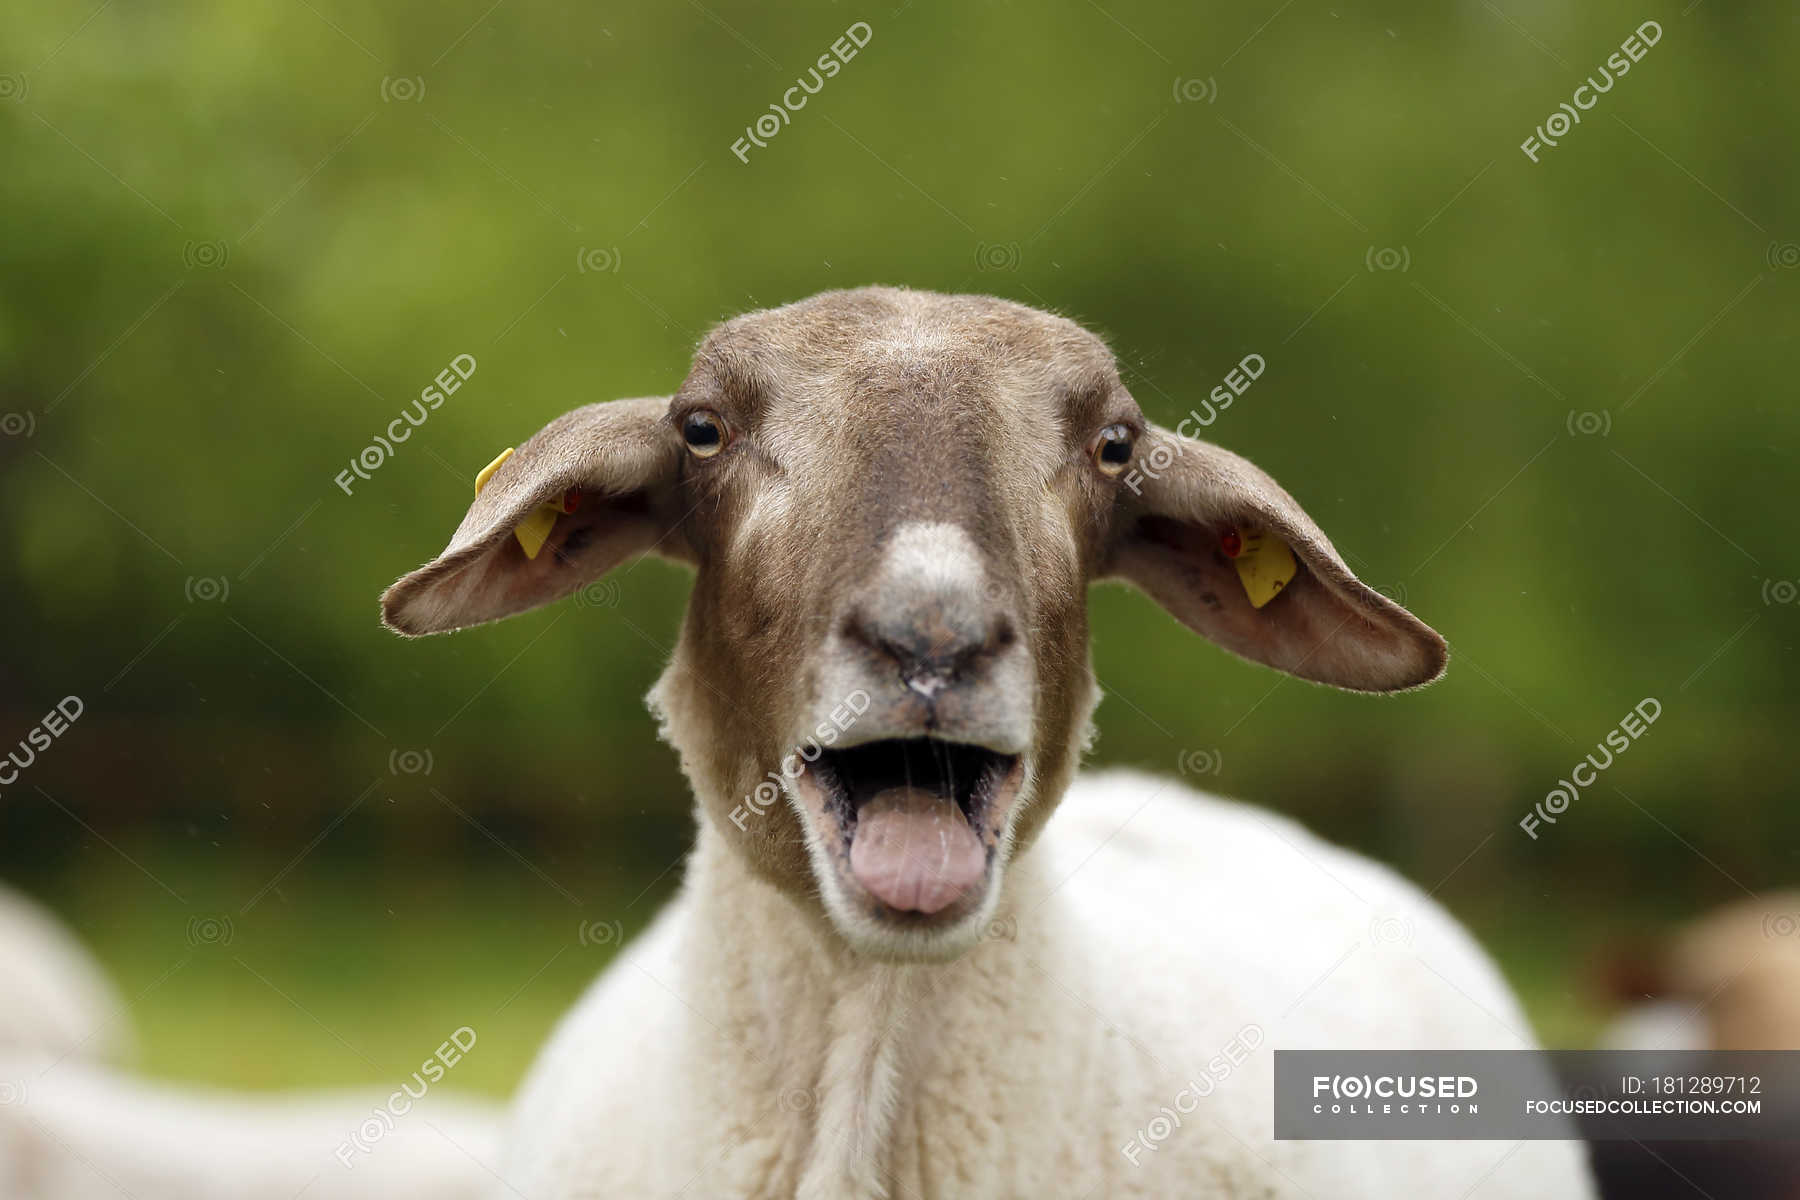 Bleating domestic sheep, Ovis orientalis aries — animal, bicolored - Stock  Photo | #181289712